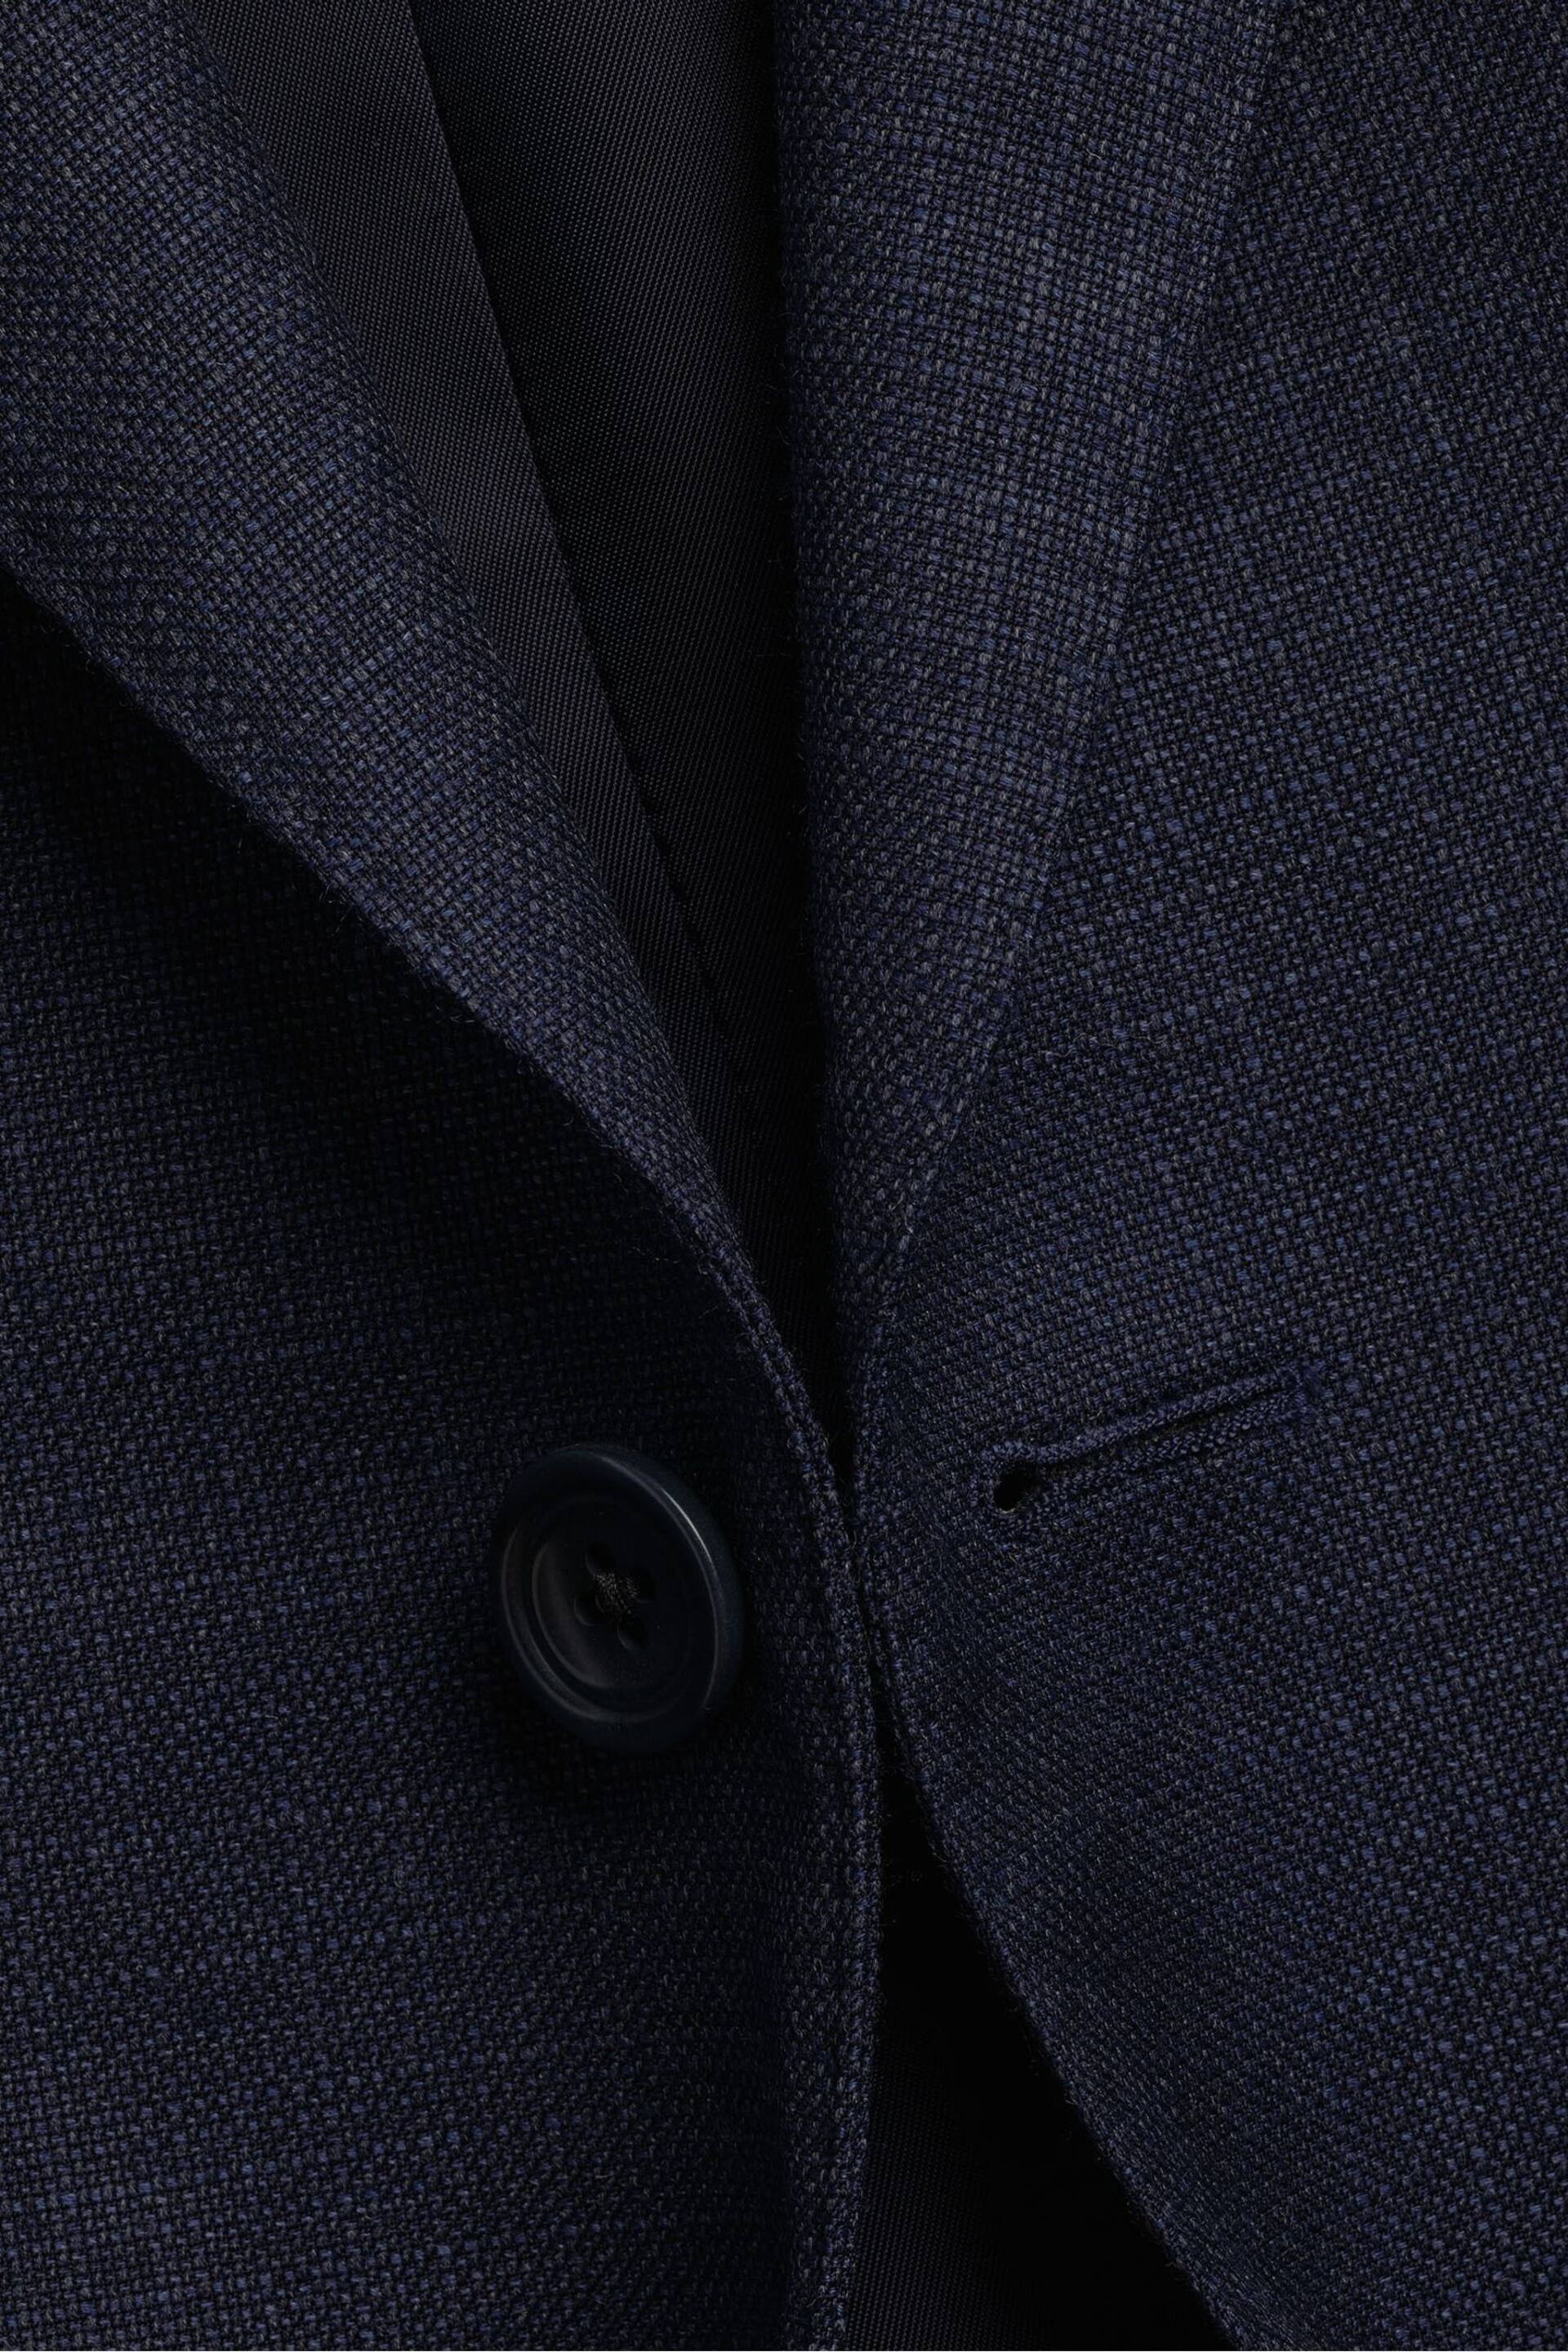 Charles Tyrwhitt Navy Blue Slim Fit Italian Luxury Suit: Jacket - Image 5 of 5